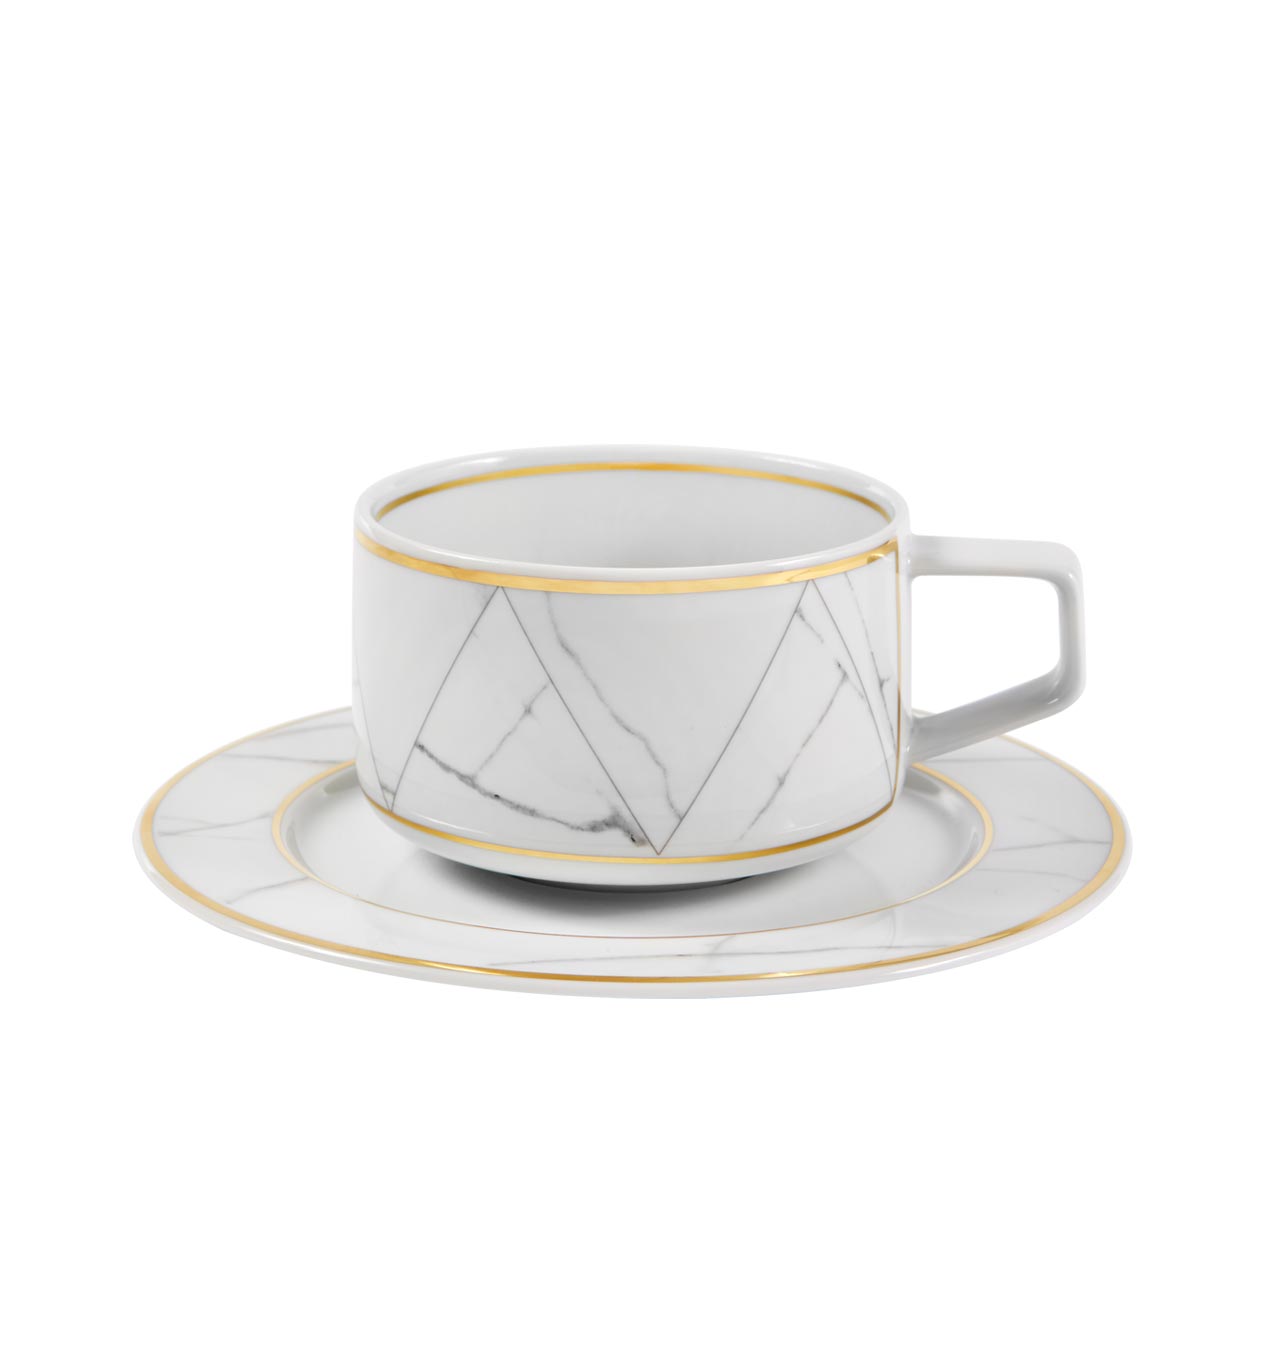 https://www.newformsdesign.com/images/prodotti/1906-10-carrara-teacup.jpg